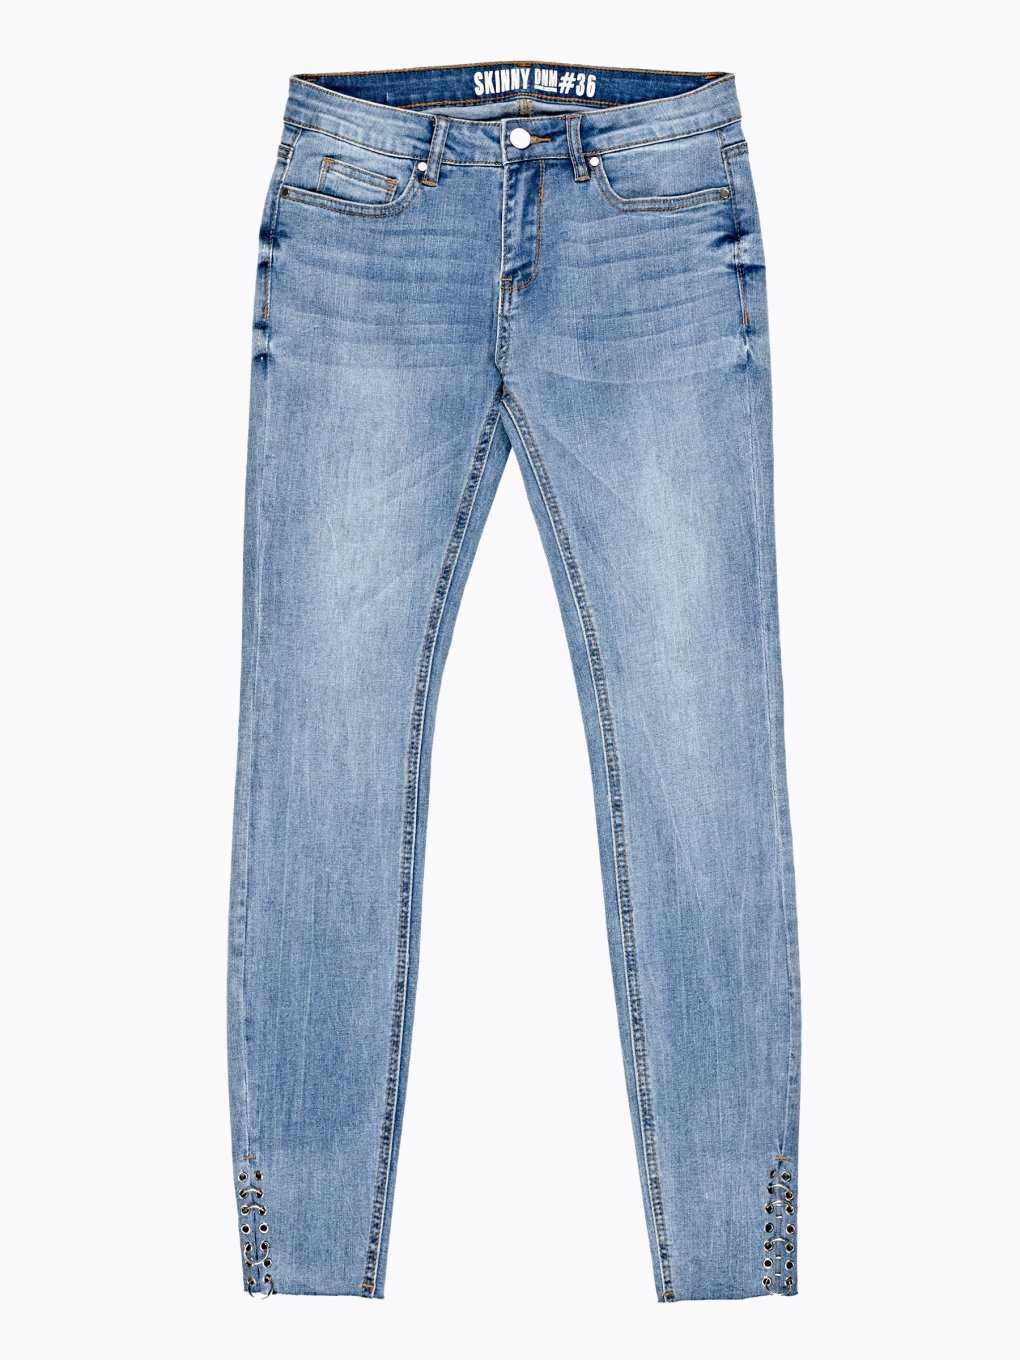 Skinny jeans with metal rings